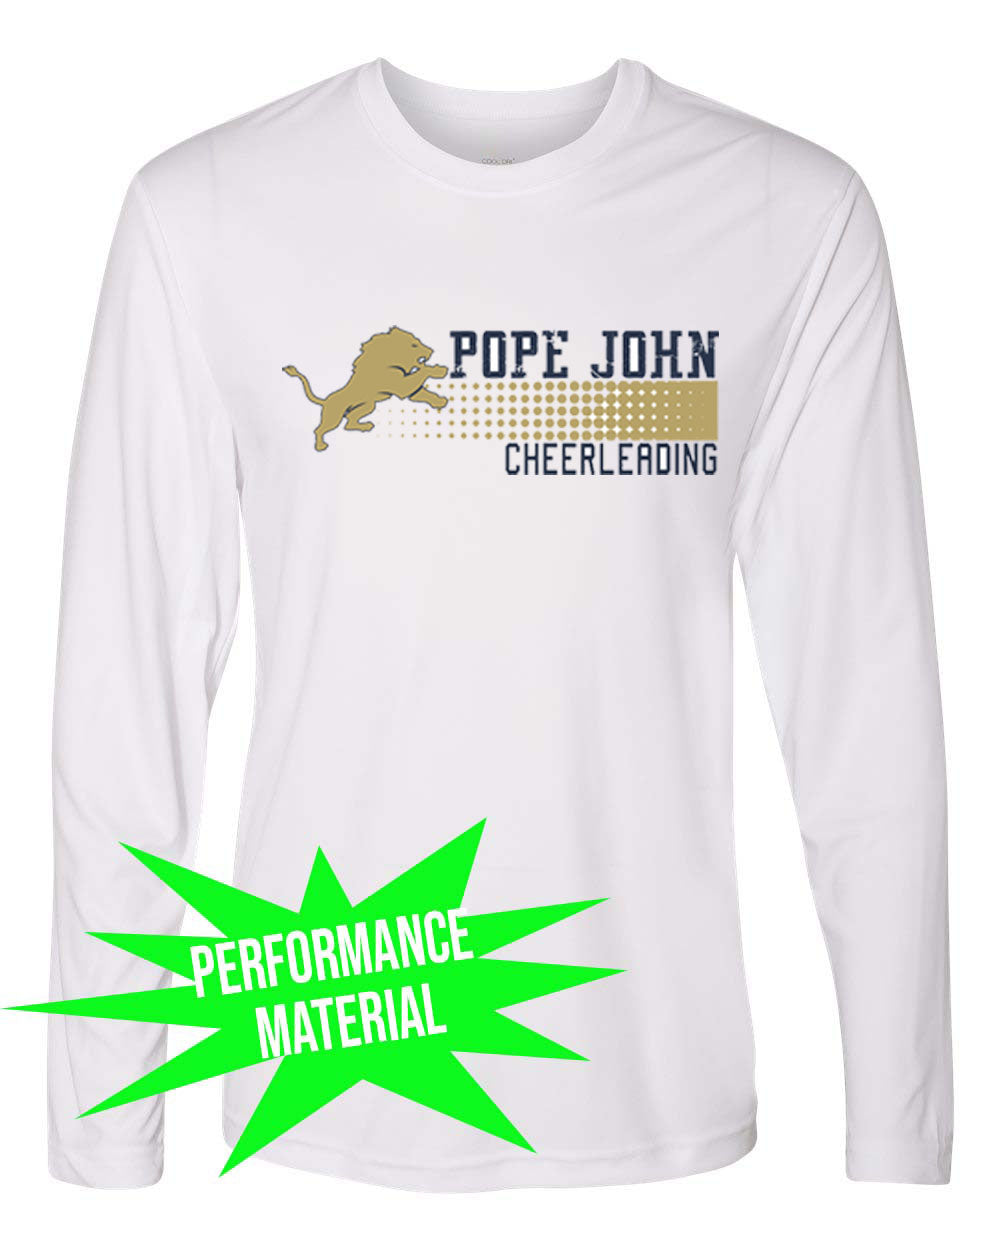 Pope John Cheer Performance Material Design 4 Long Sleeve Shirt